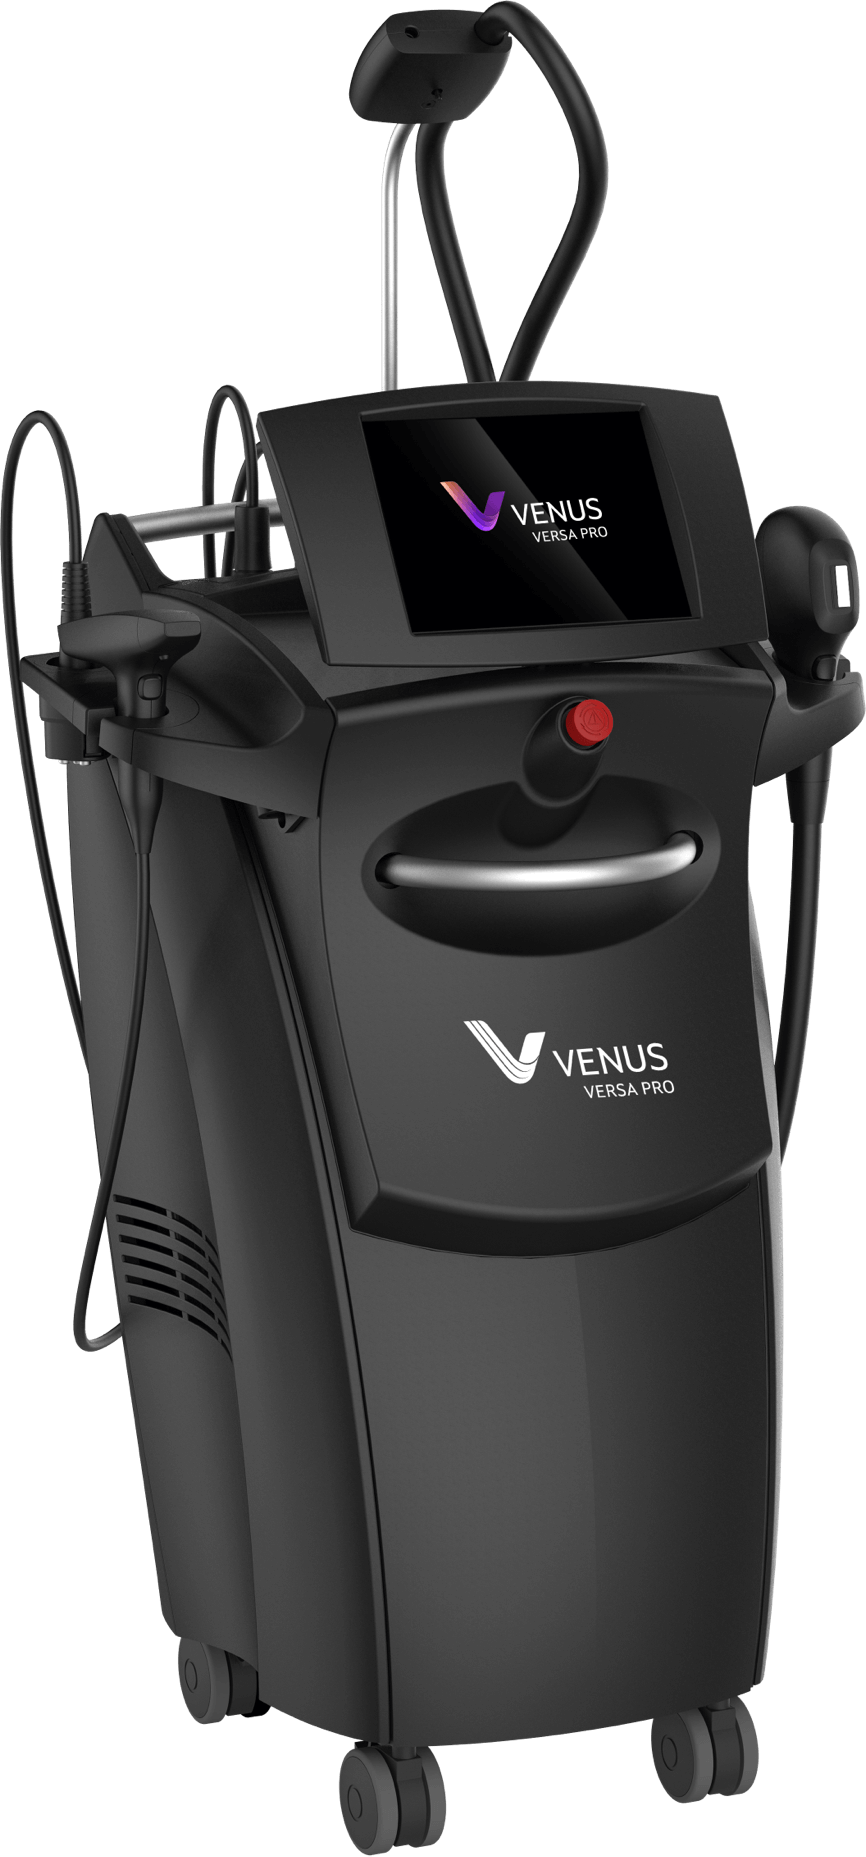 Venus Versa- related Device